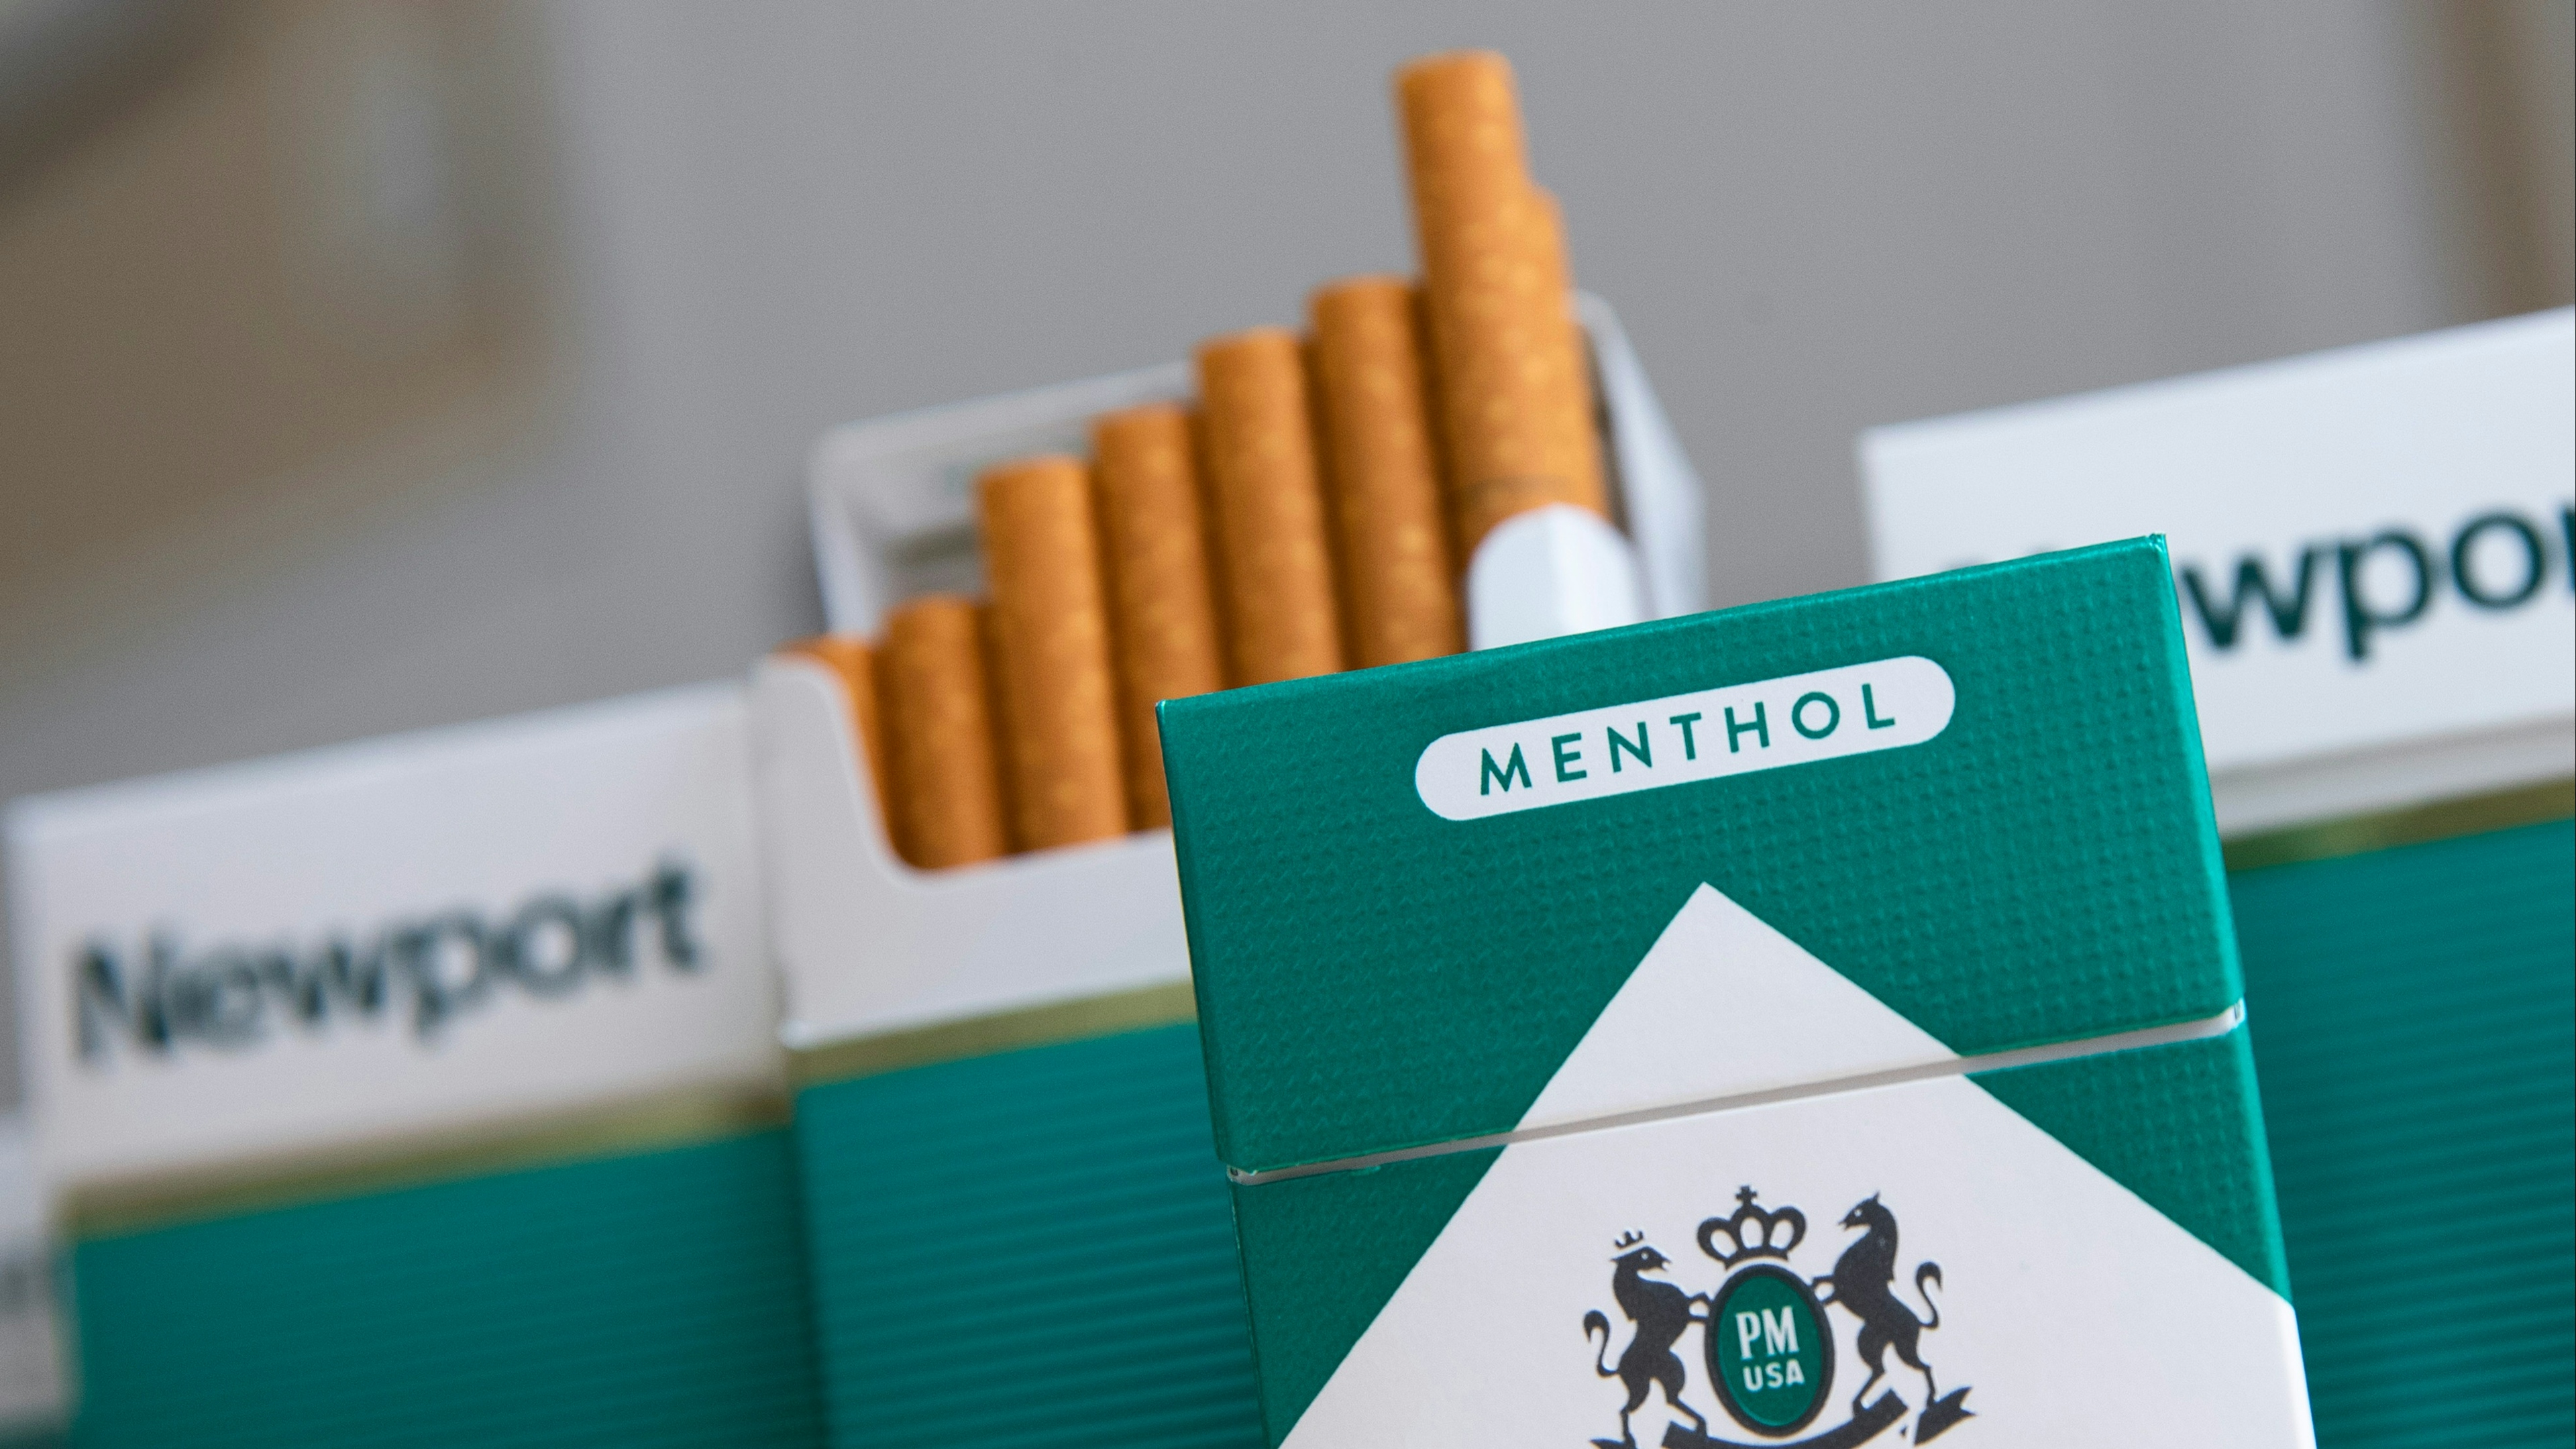 Methol cigarettes displayed